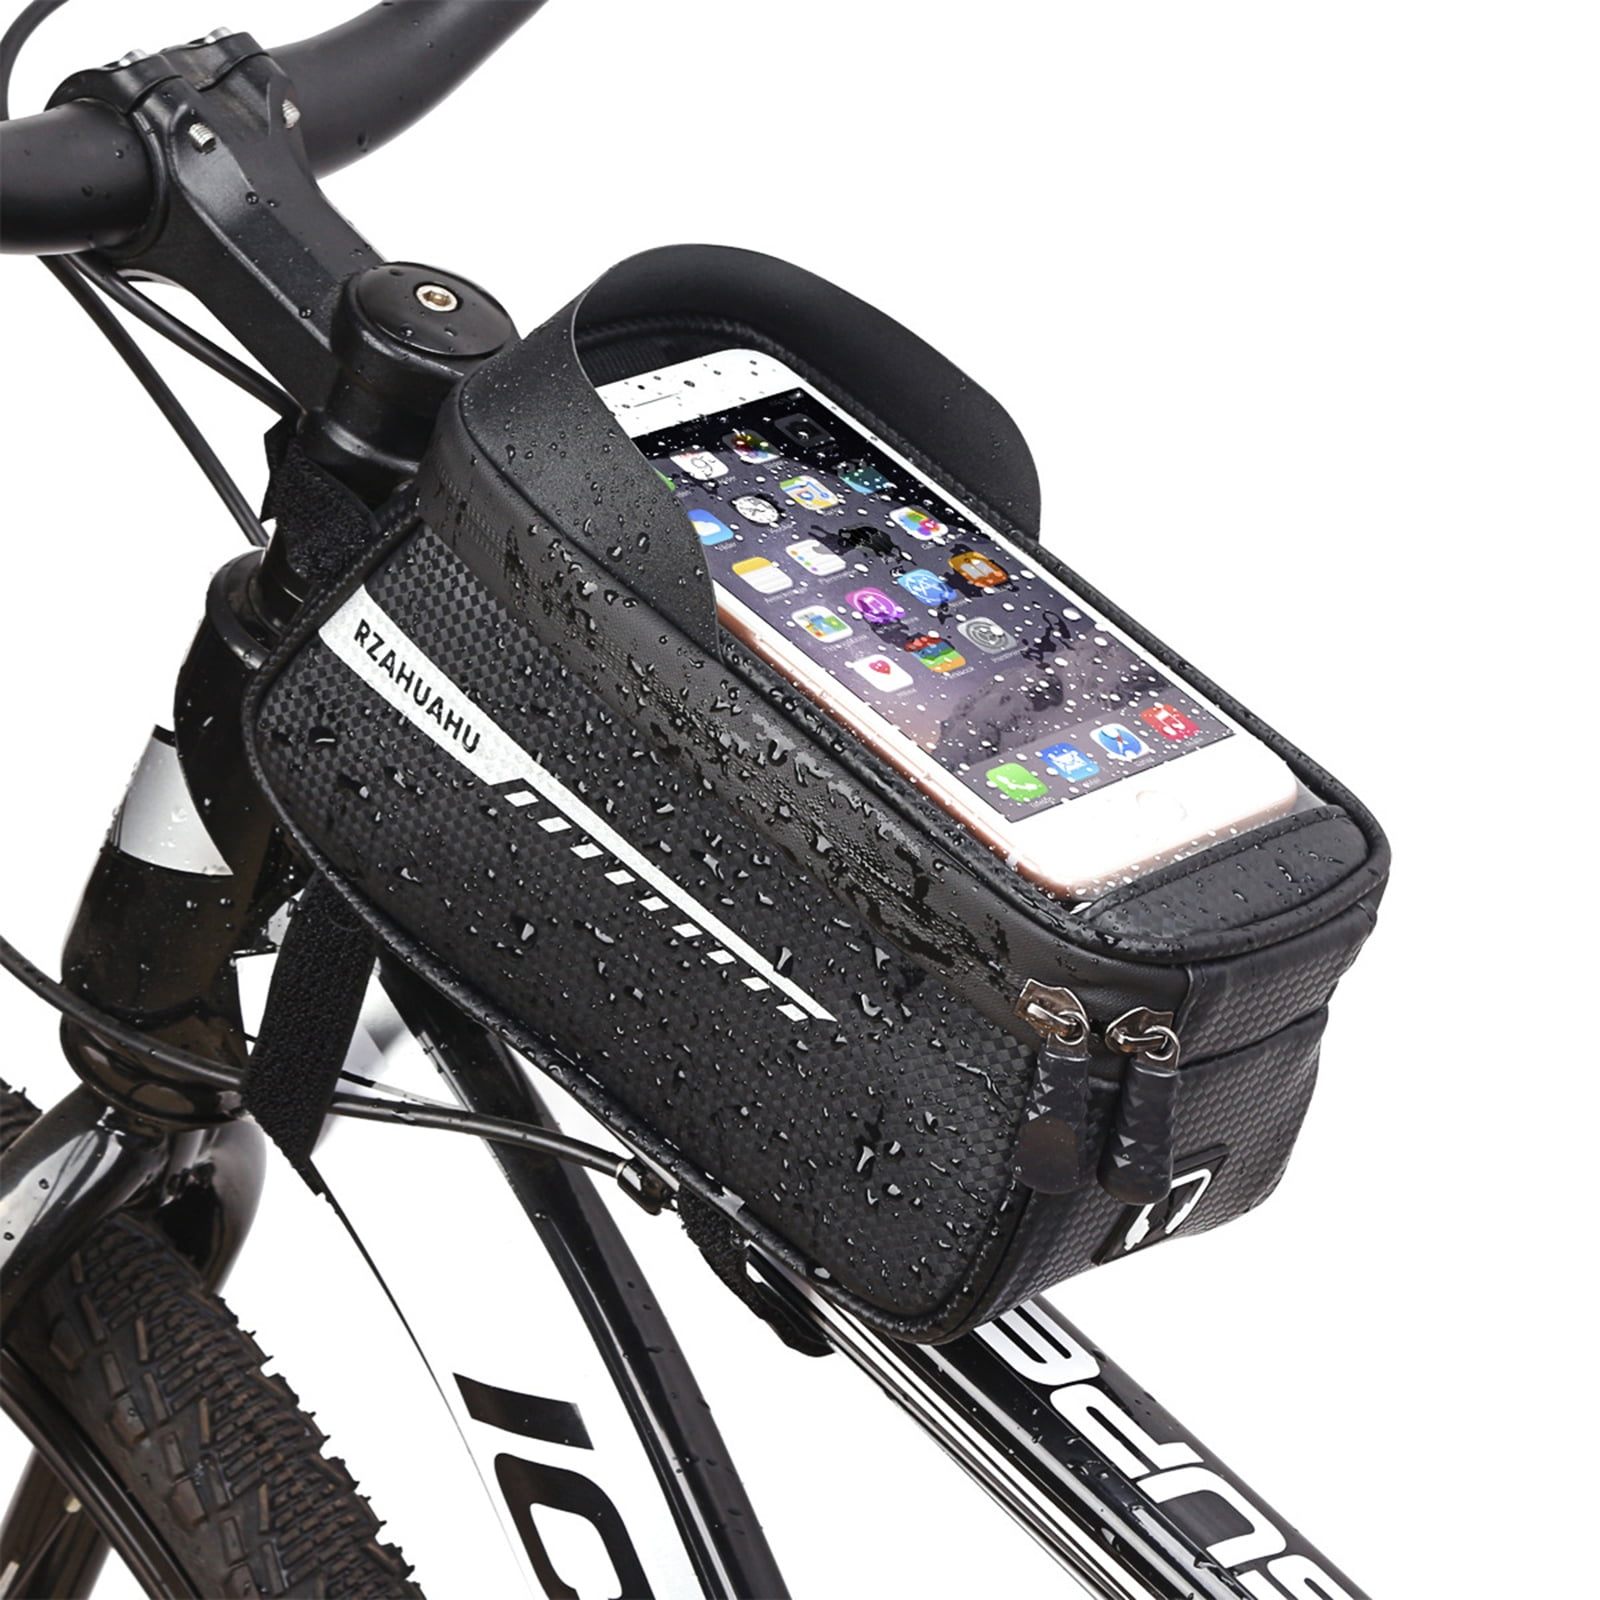 Lveal Bike Frame Bag Bike Phone Mount Bag Cycling Waterproof Front Frame Top Tube Handlebar Bag Bicycle Touchscreen Holder Case Sun Visor Storage Bag Phone Mount Pack for Cellphones Below 6.5 Inches